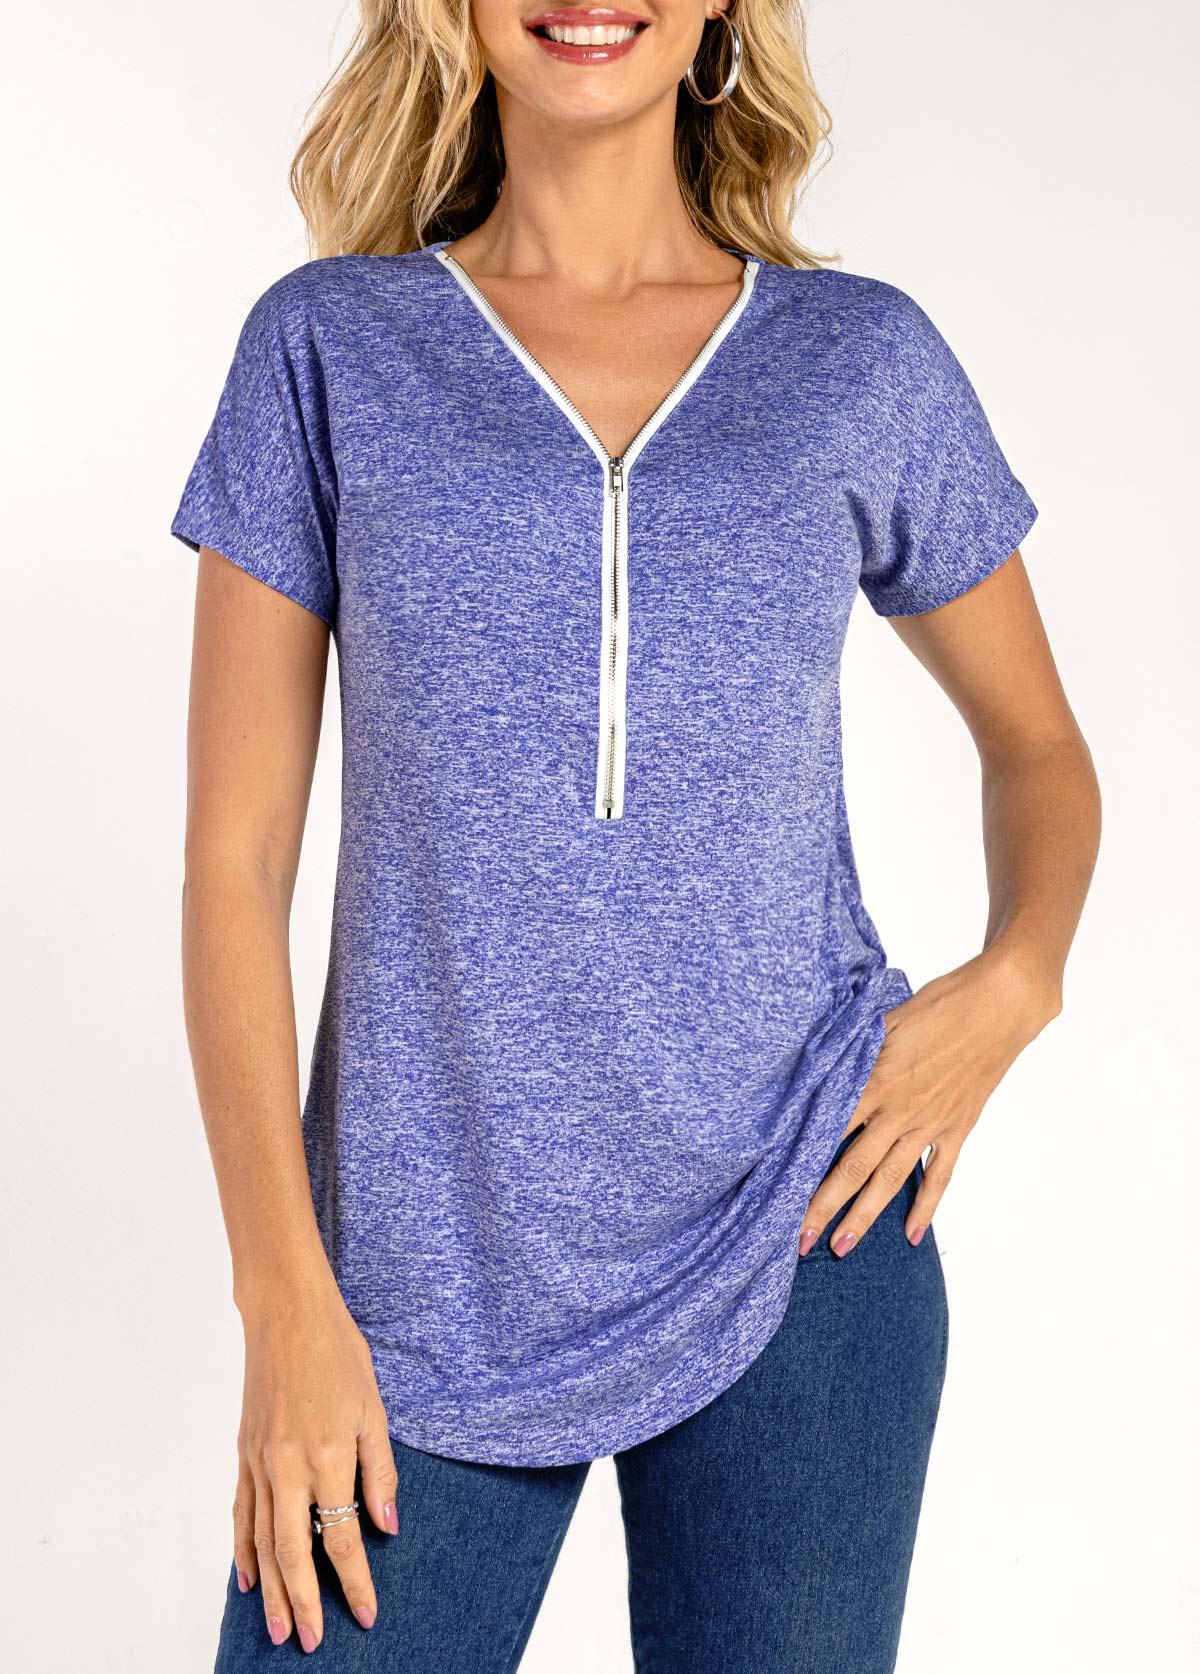 Short Sleeve Purplish Blue Quarter Zip T Shirt